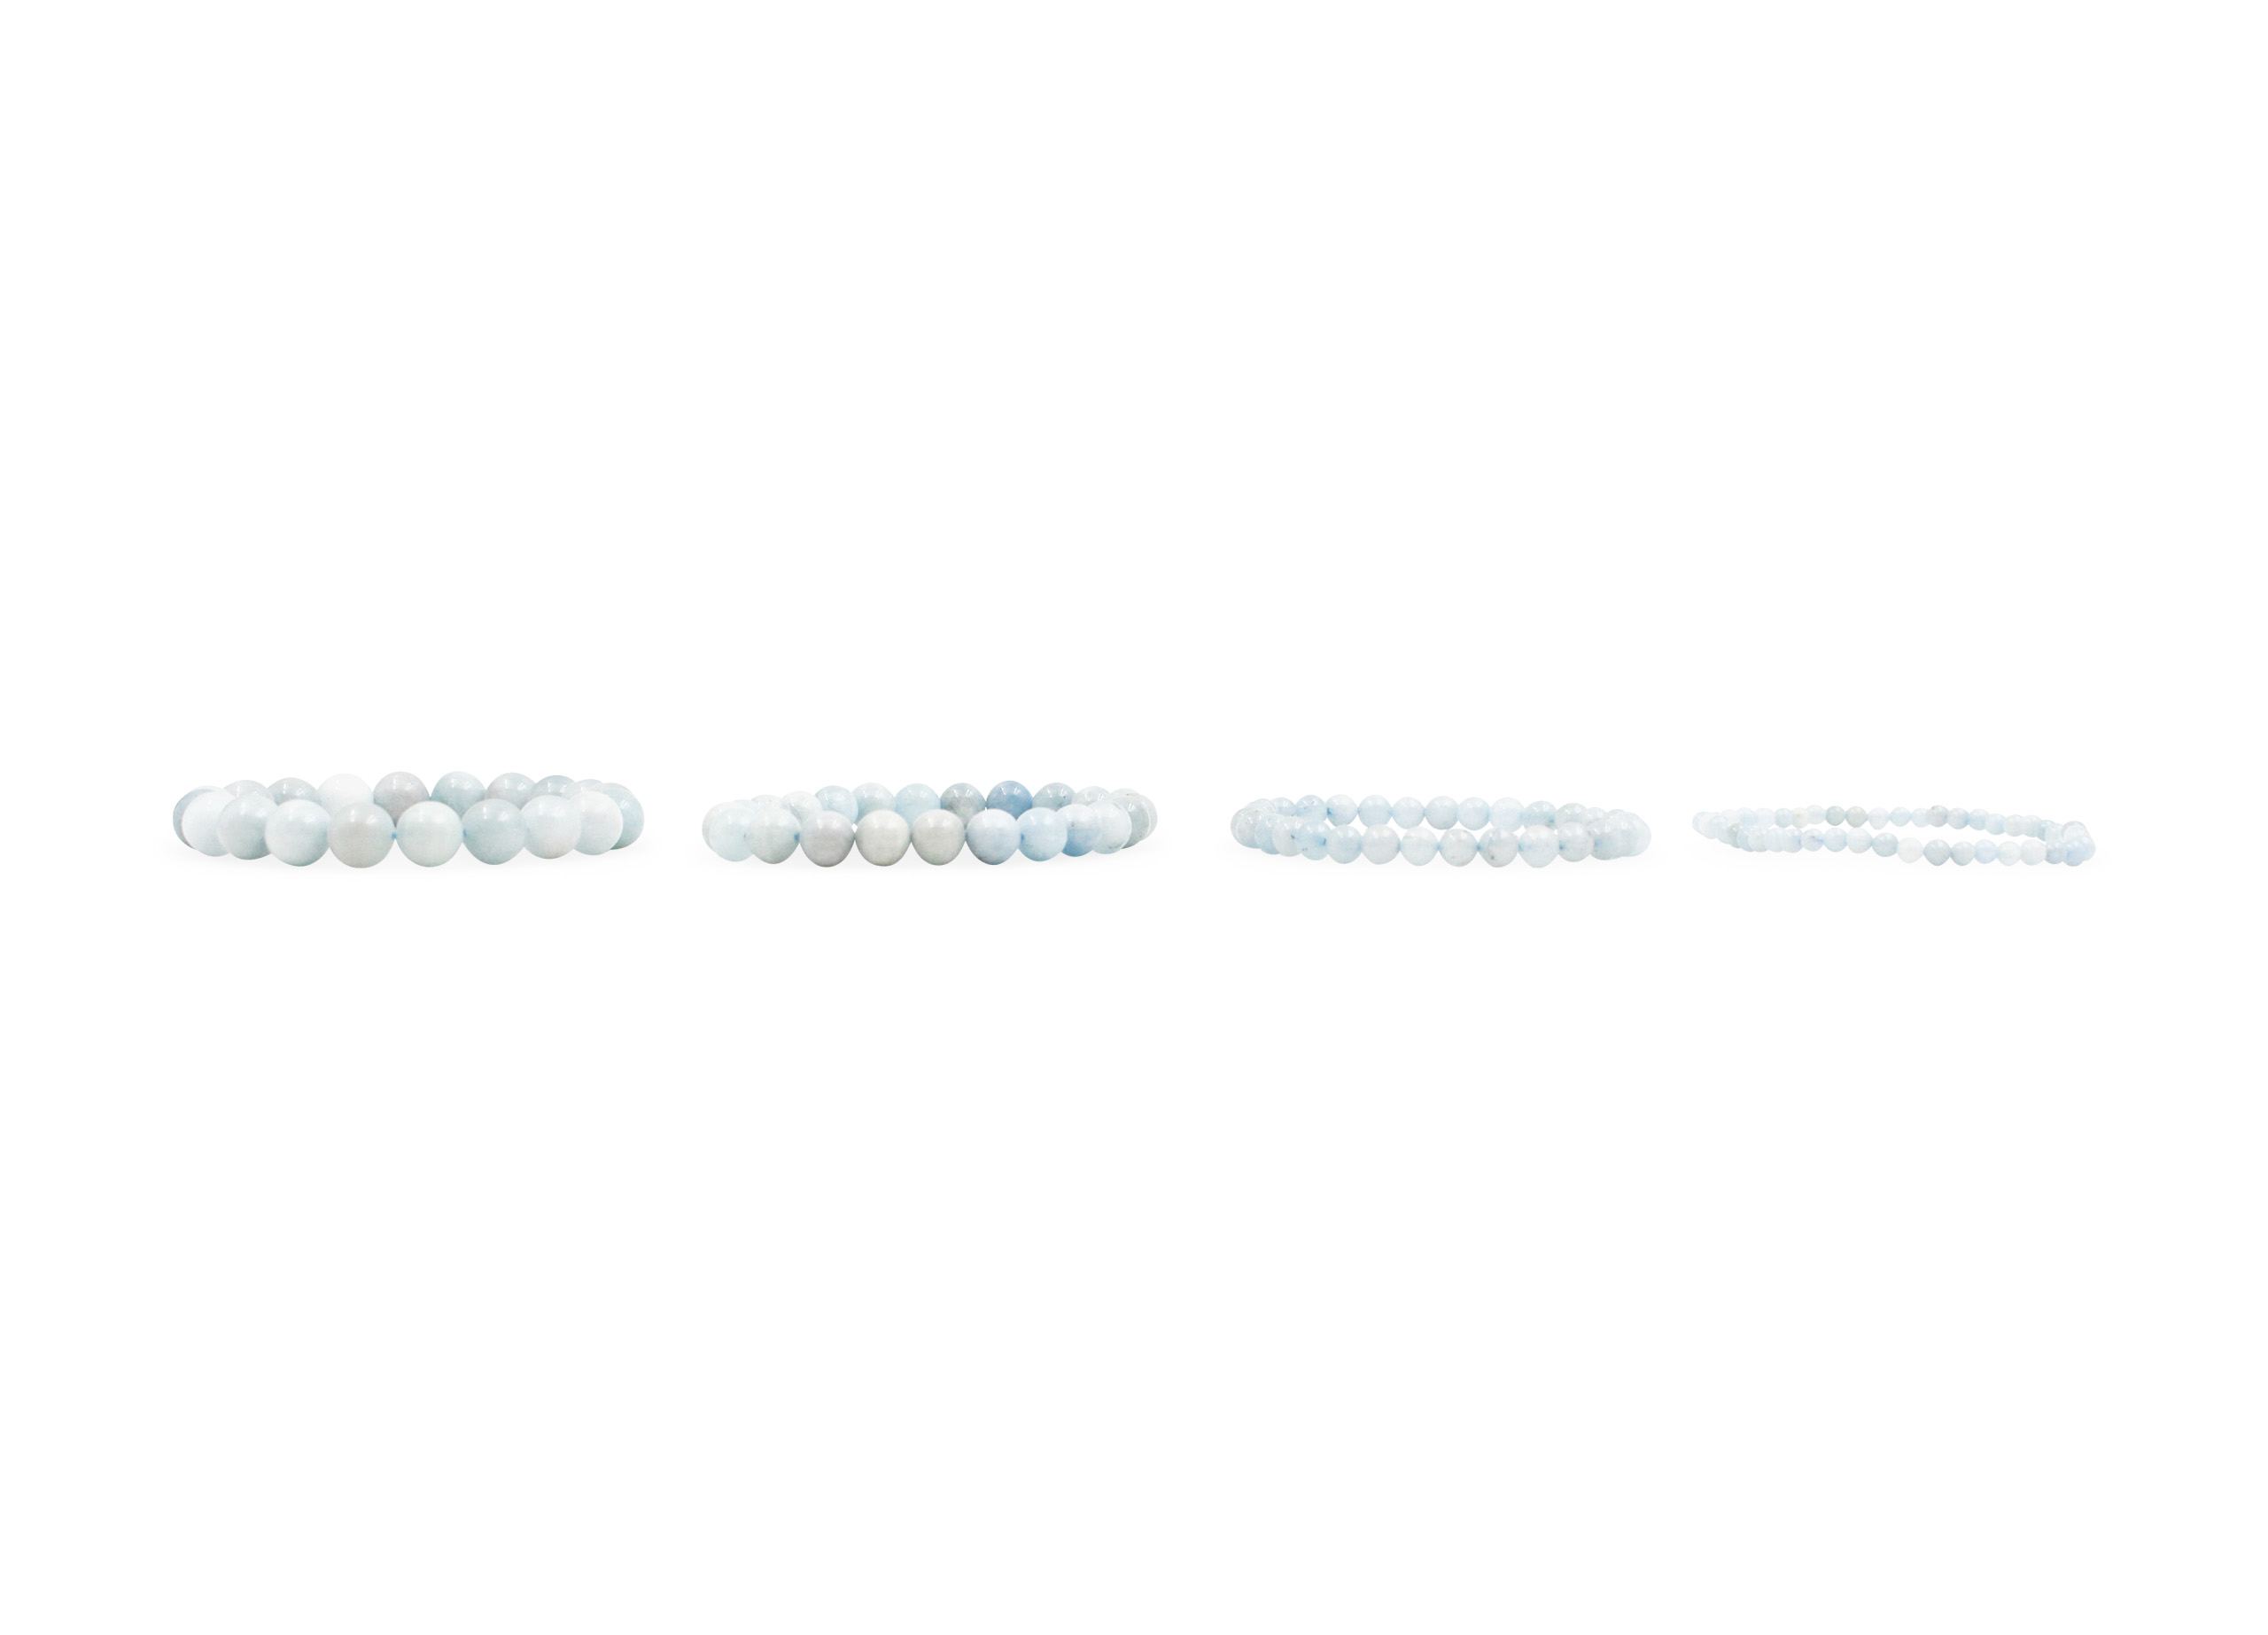 Aquamarine bracelet - Crystal dreams